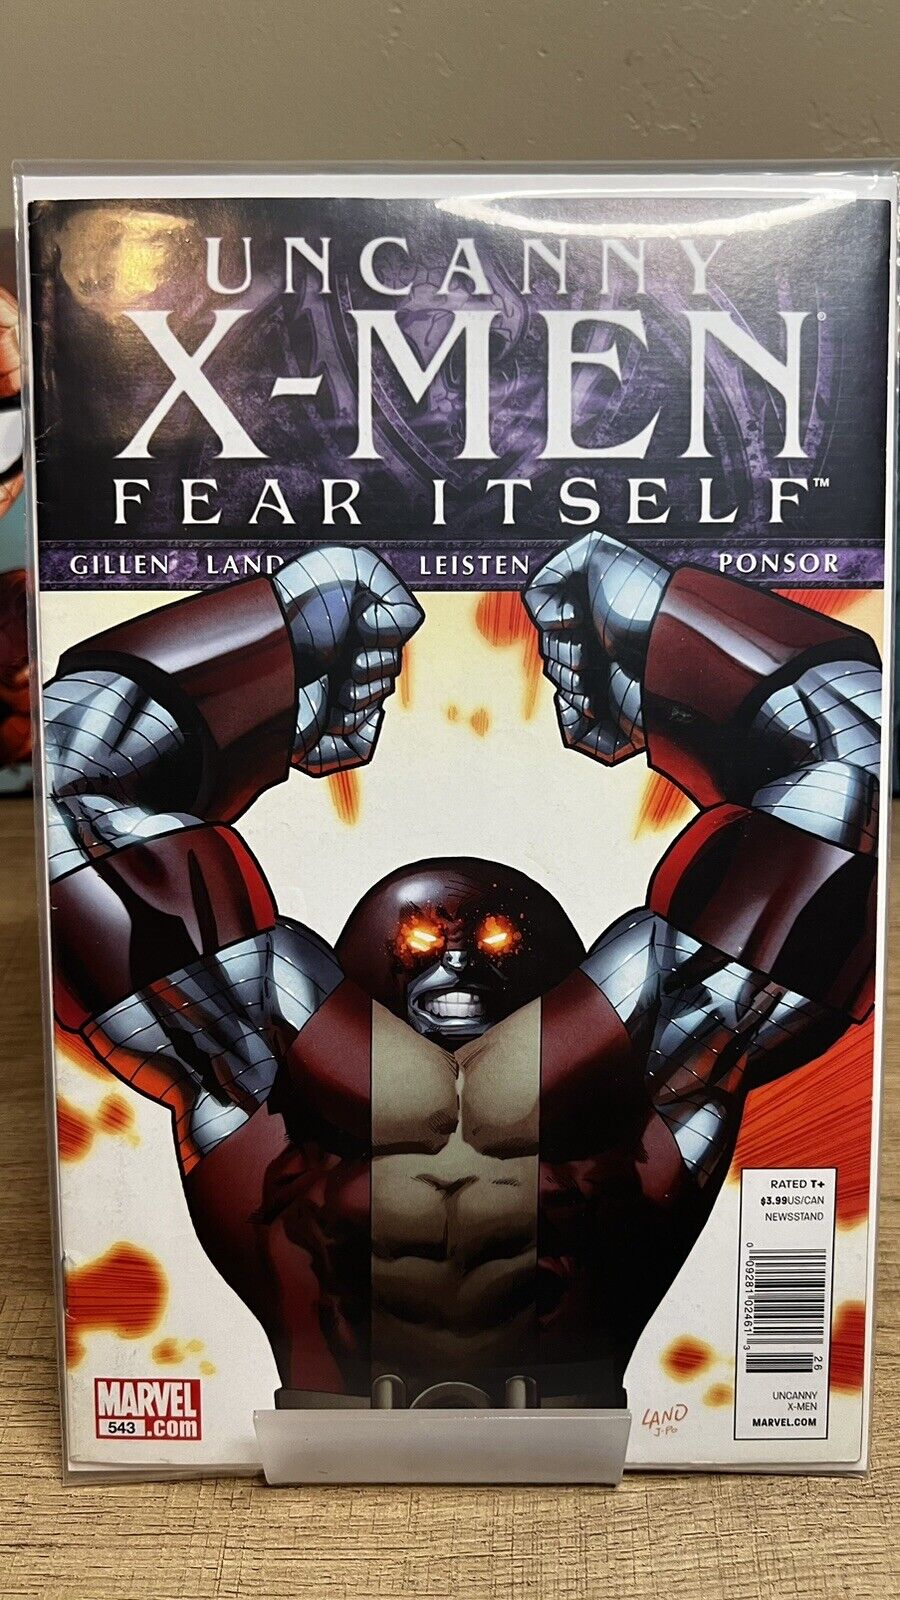 Uncanny X-Men #543 - Fear Itself - Marvel Comics 2011 VF Colossus Key